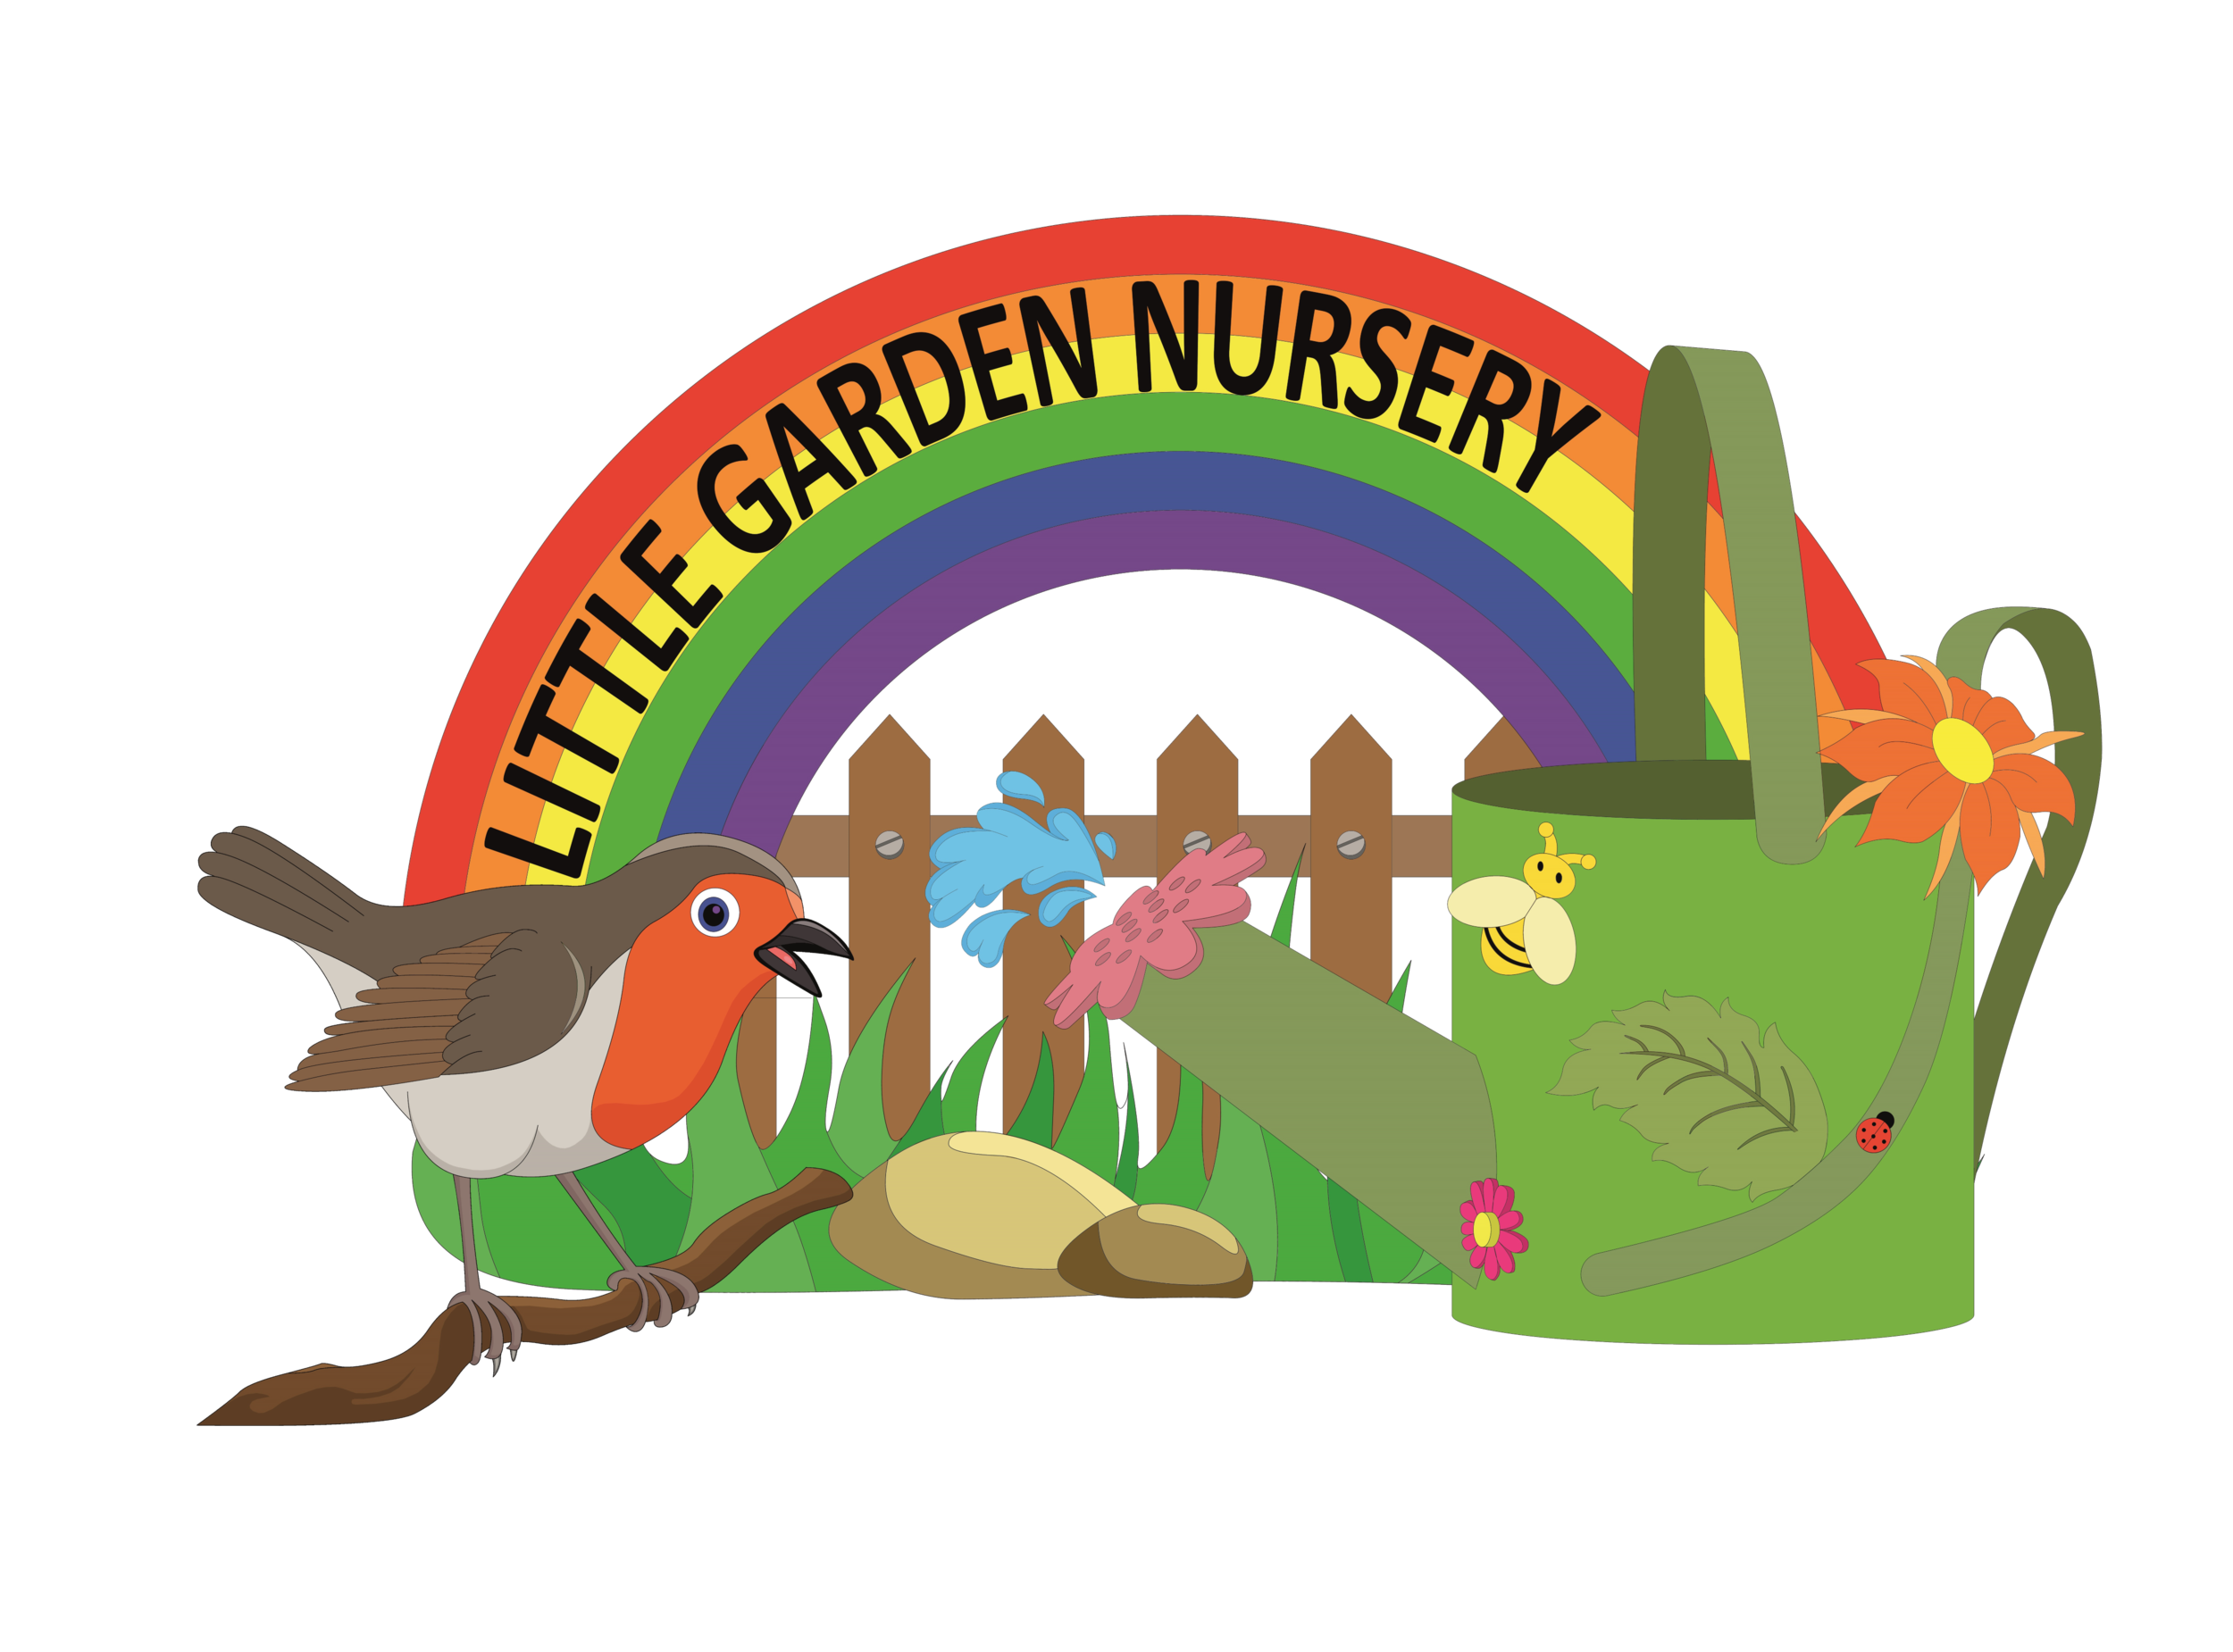 Little Garden Nursery